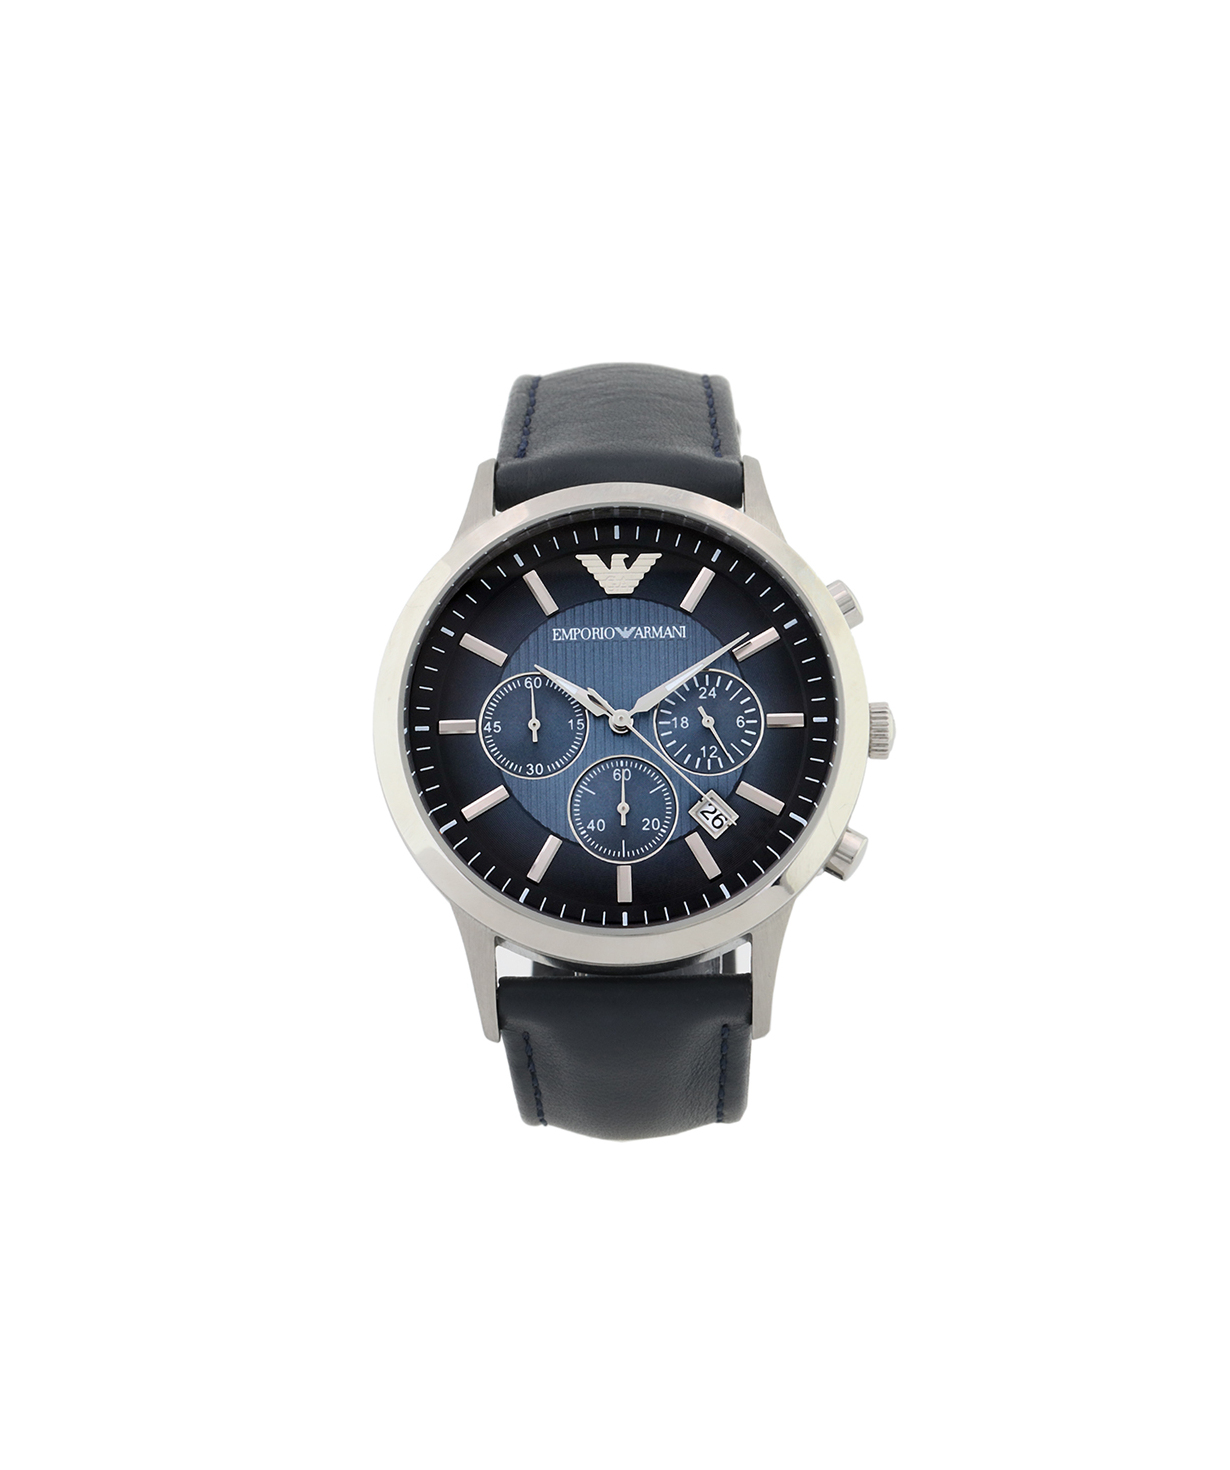 Time Wrist 4u.am `Emporio AR2473 watch Armani` |